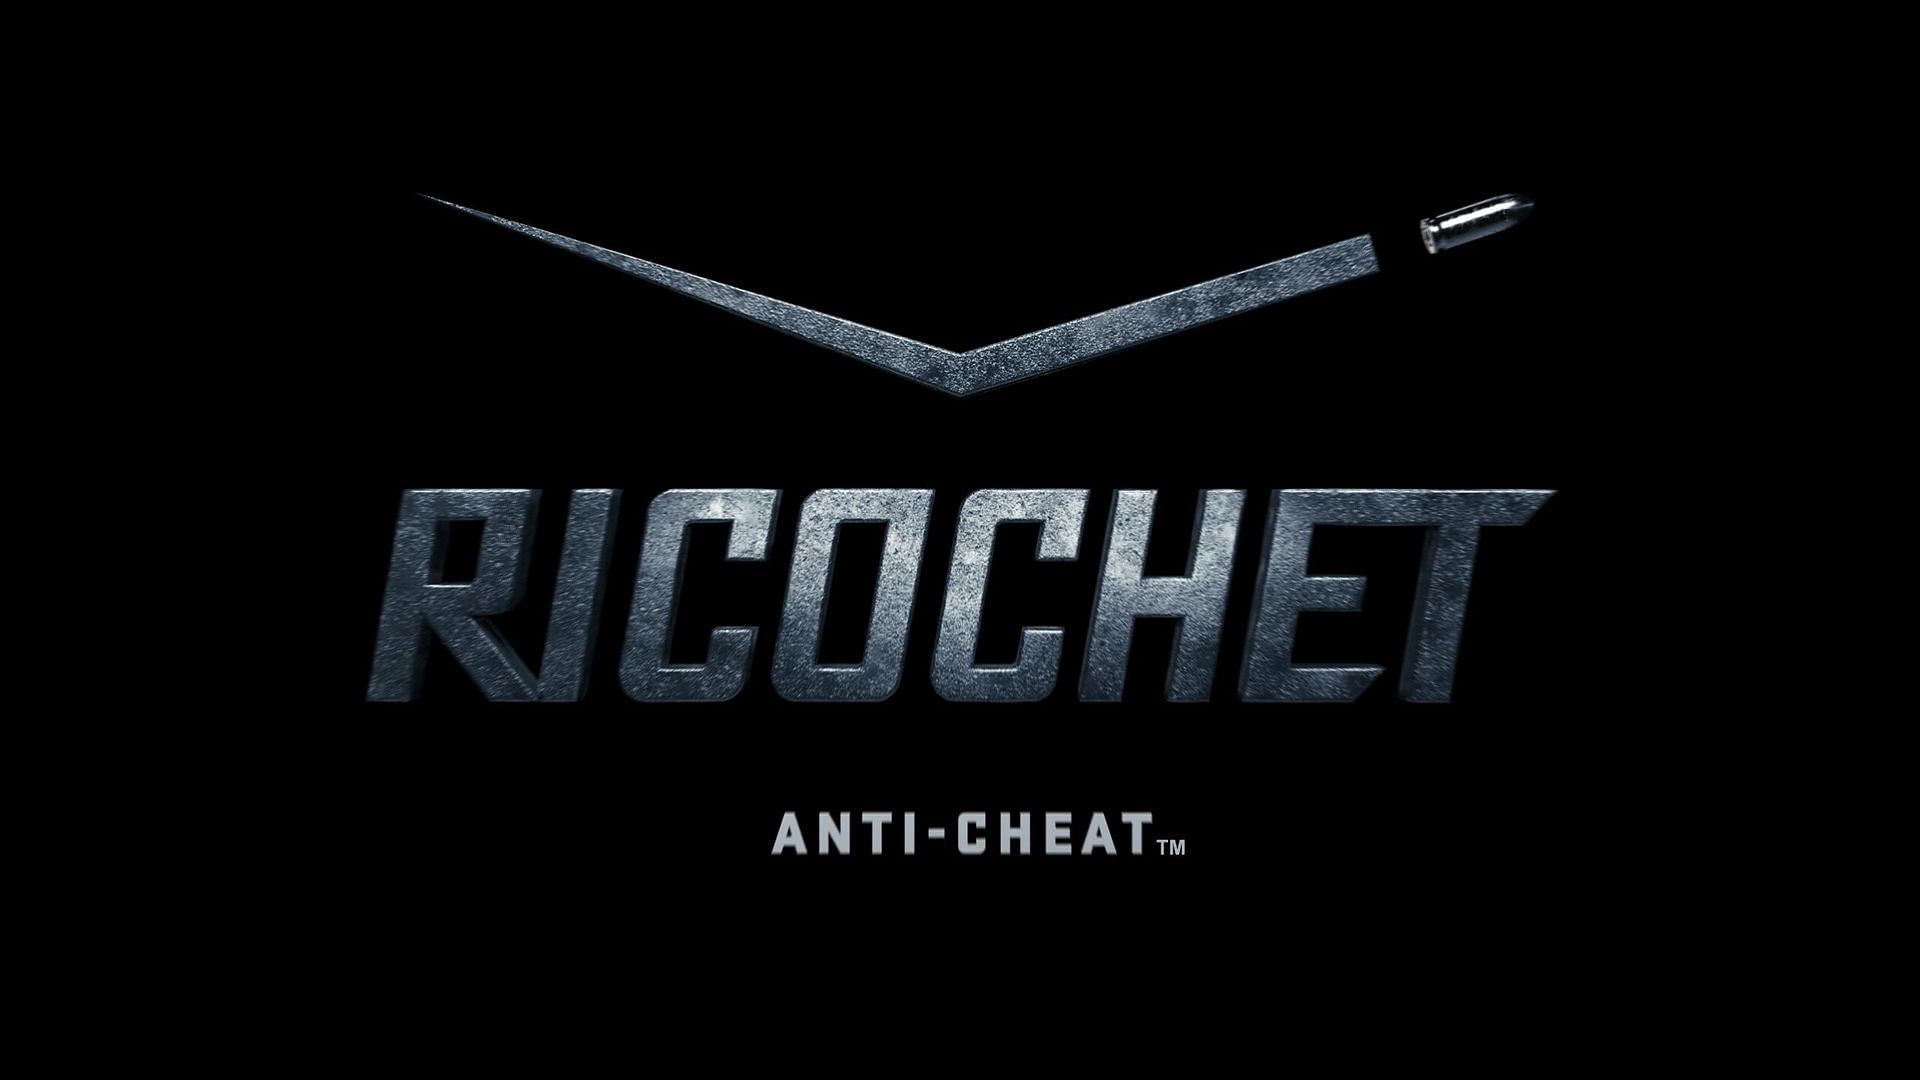 Ricochet anti-cheat (image via Activision)